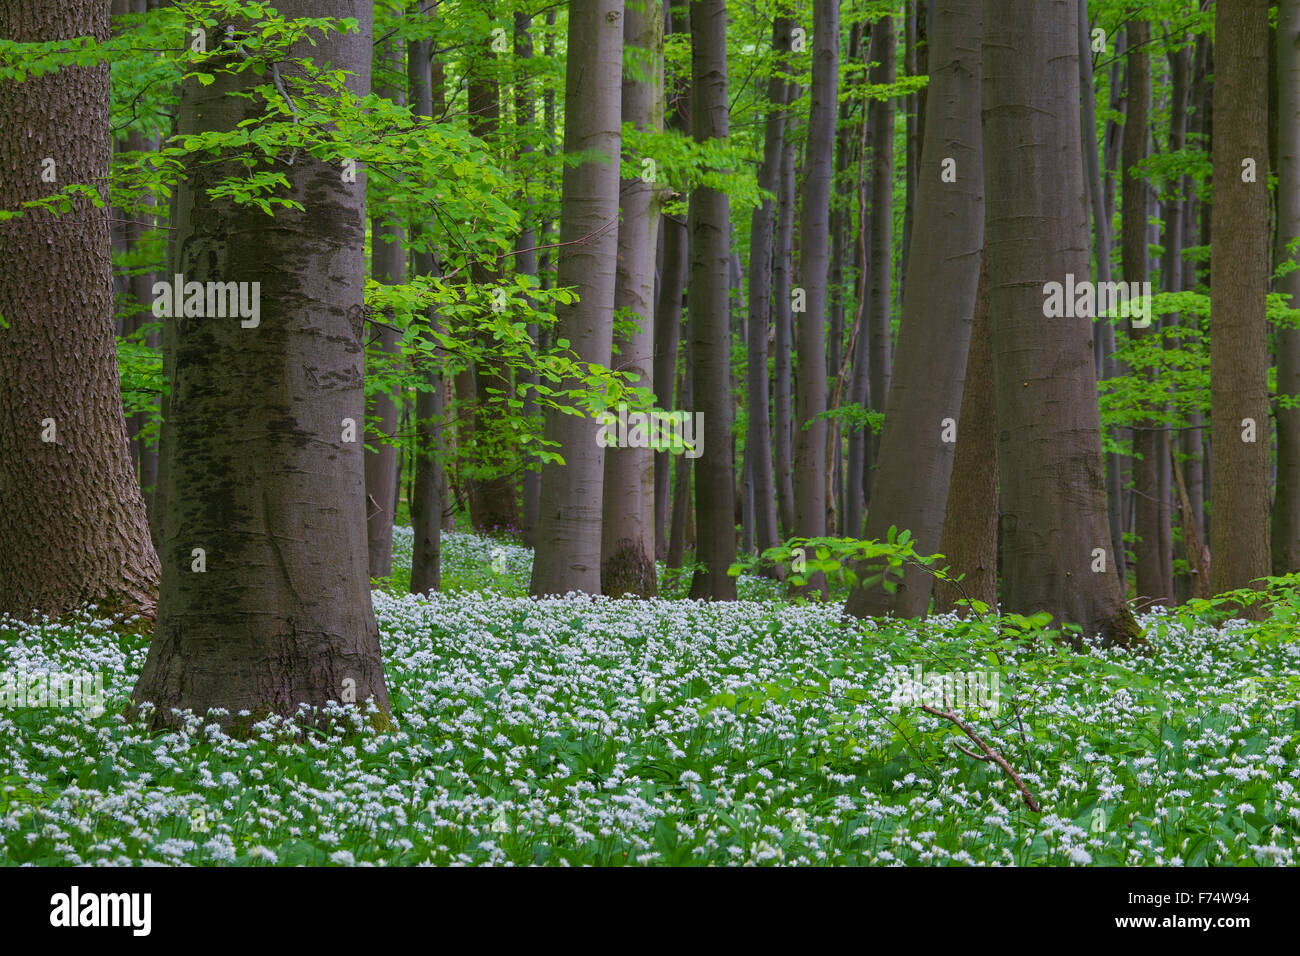 Wood garlic / ramsons / wild garlic (Allium ursinum) flowering in beech forest in spring, Hainich National Park, Germany Stock Photo